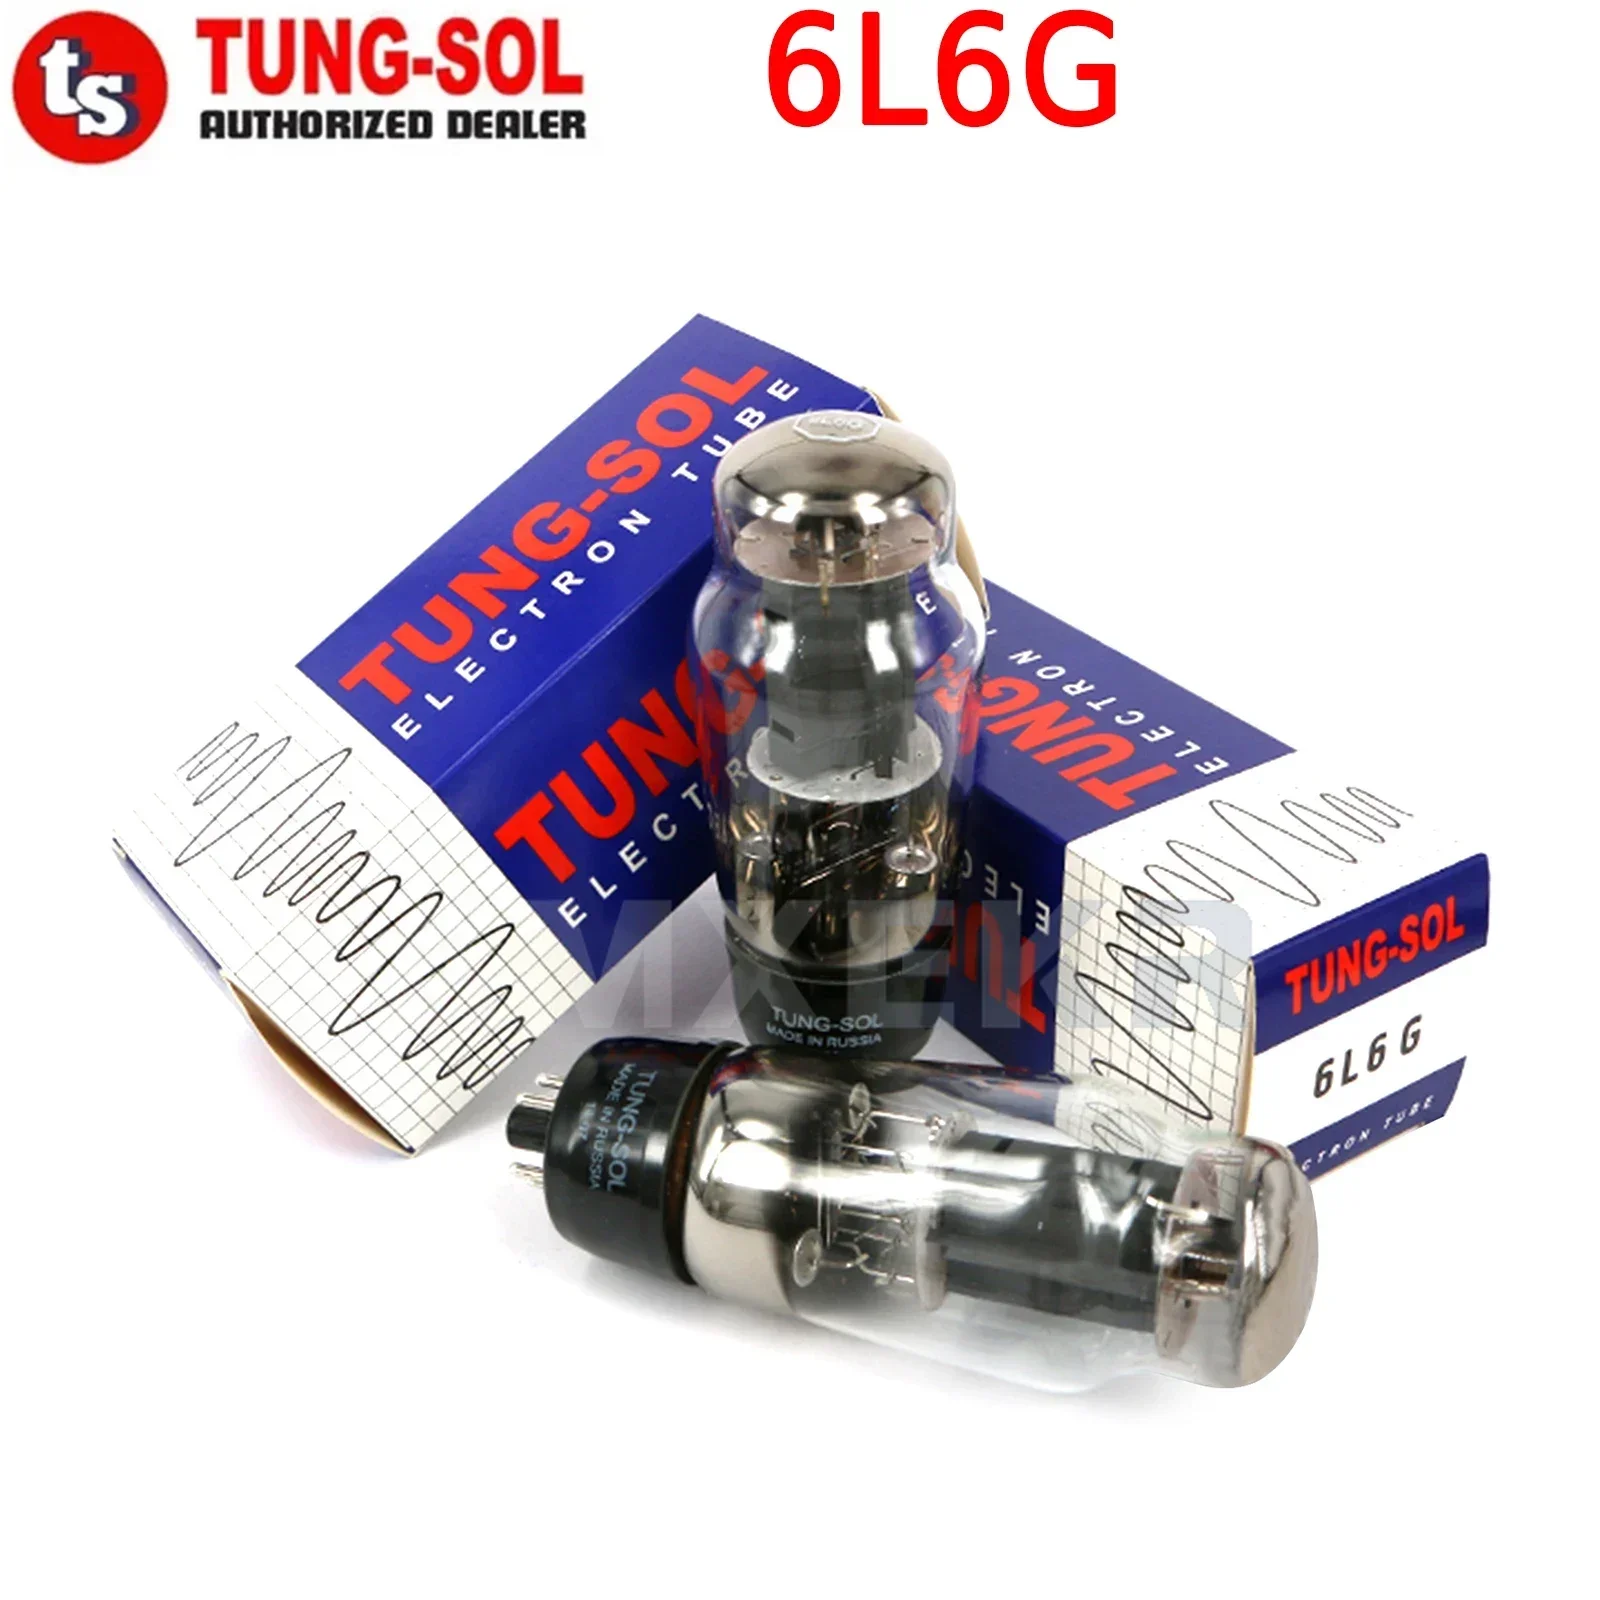 

TUNG-SOL 6L6G 6L6 Vacuum Tube Audio Valve Replaces 5881 6P3P 6L6 Tube Amplifier Kit DIY Amp Factory Test And Match Genuine